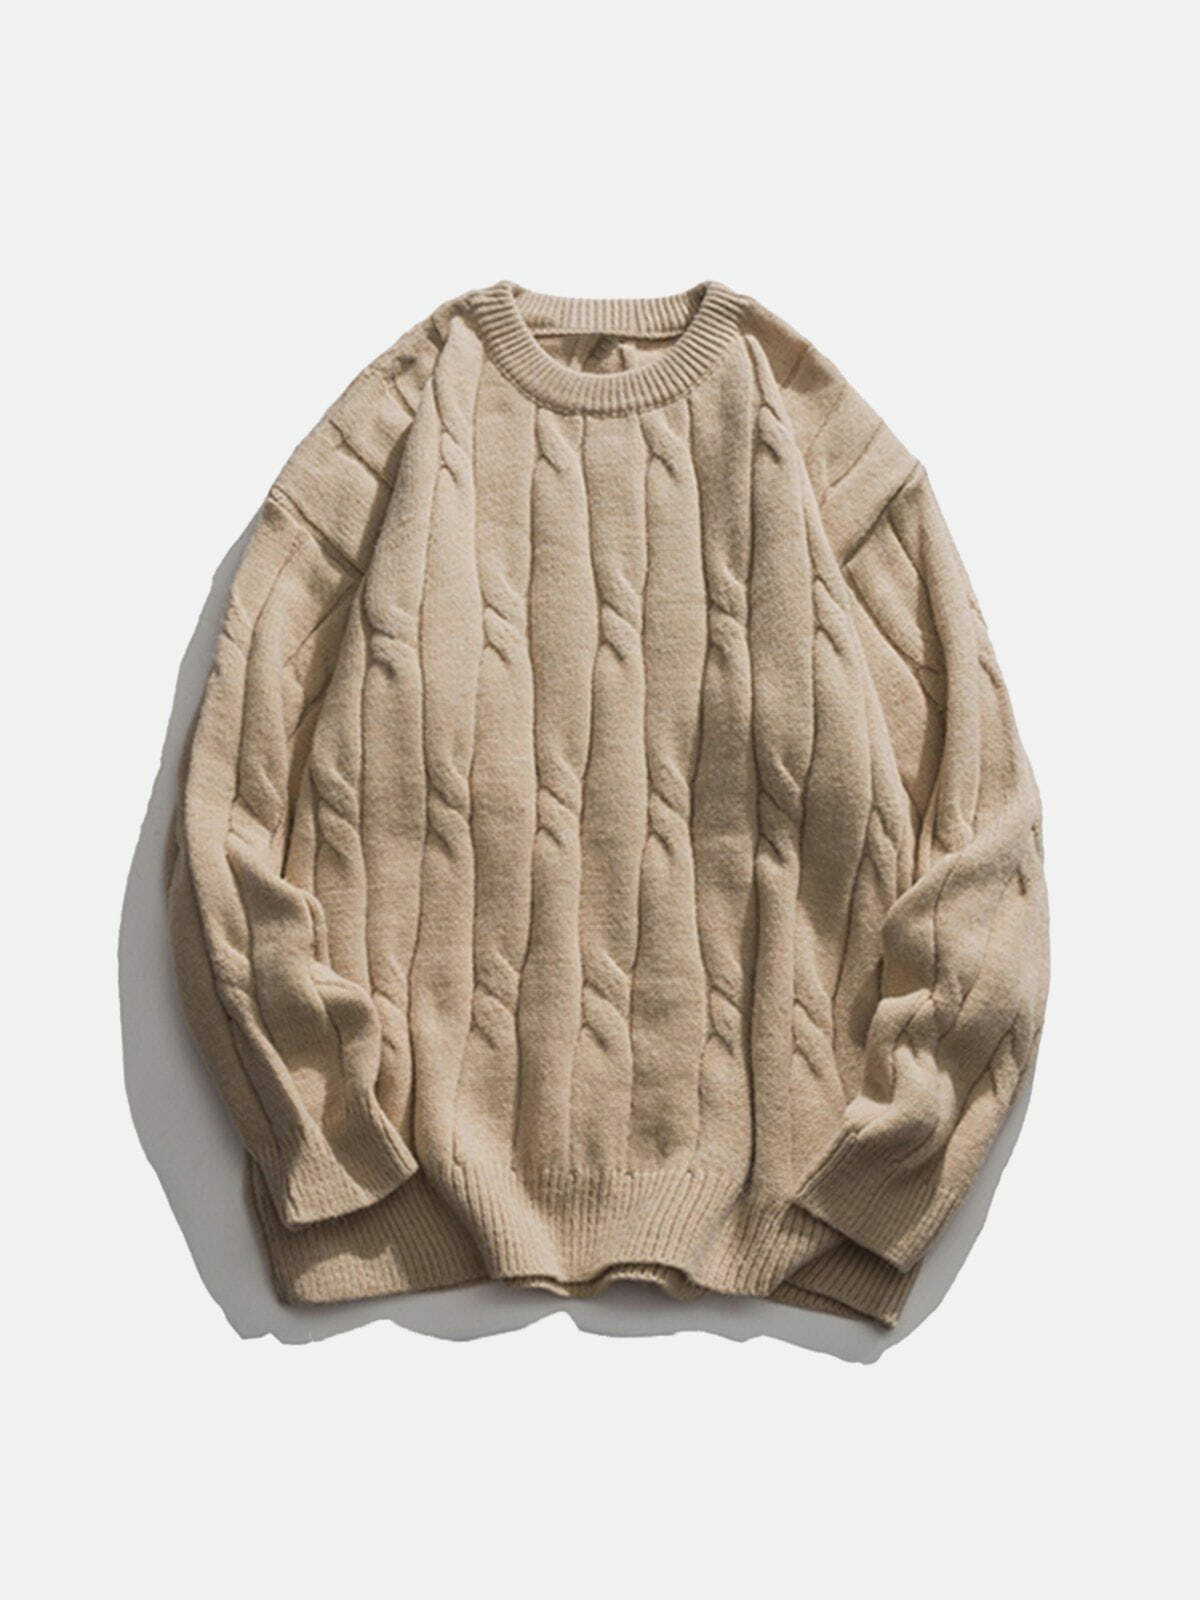 vibrant woven sweater bold & chic streetwear 5131